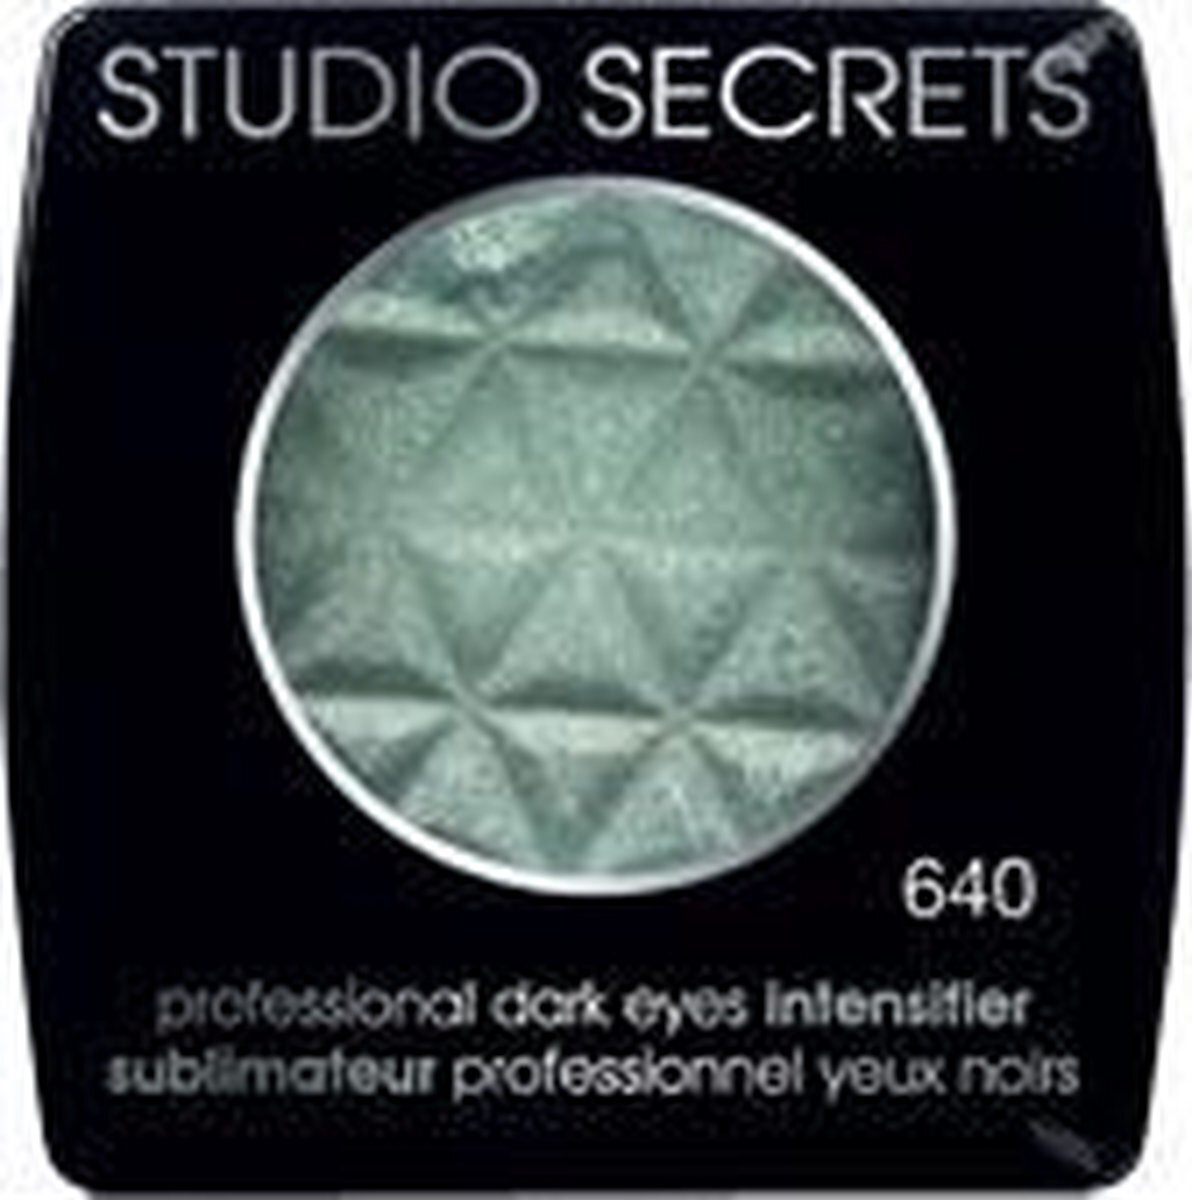 L'Oréal L'Oréal Studio Secrets Dark Eyes Intensifier Eyeshadow - 640